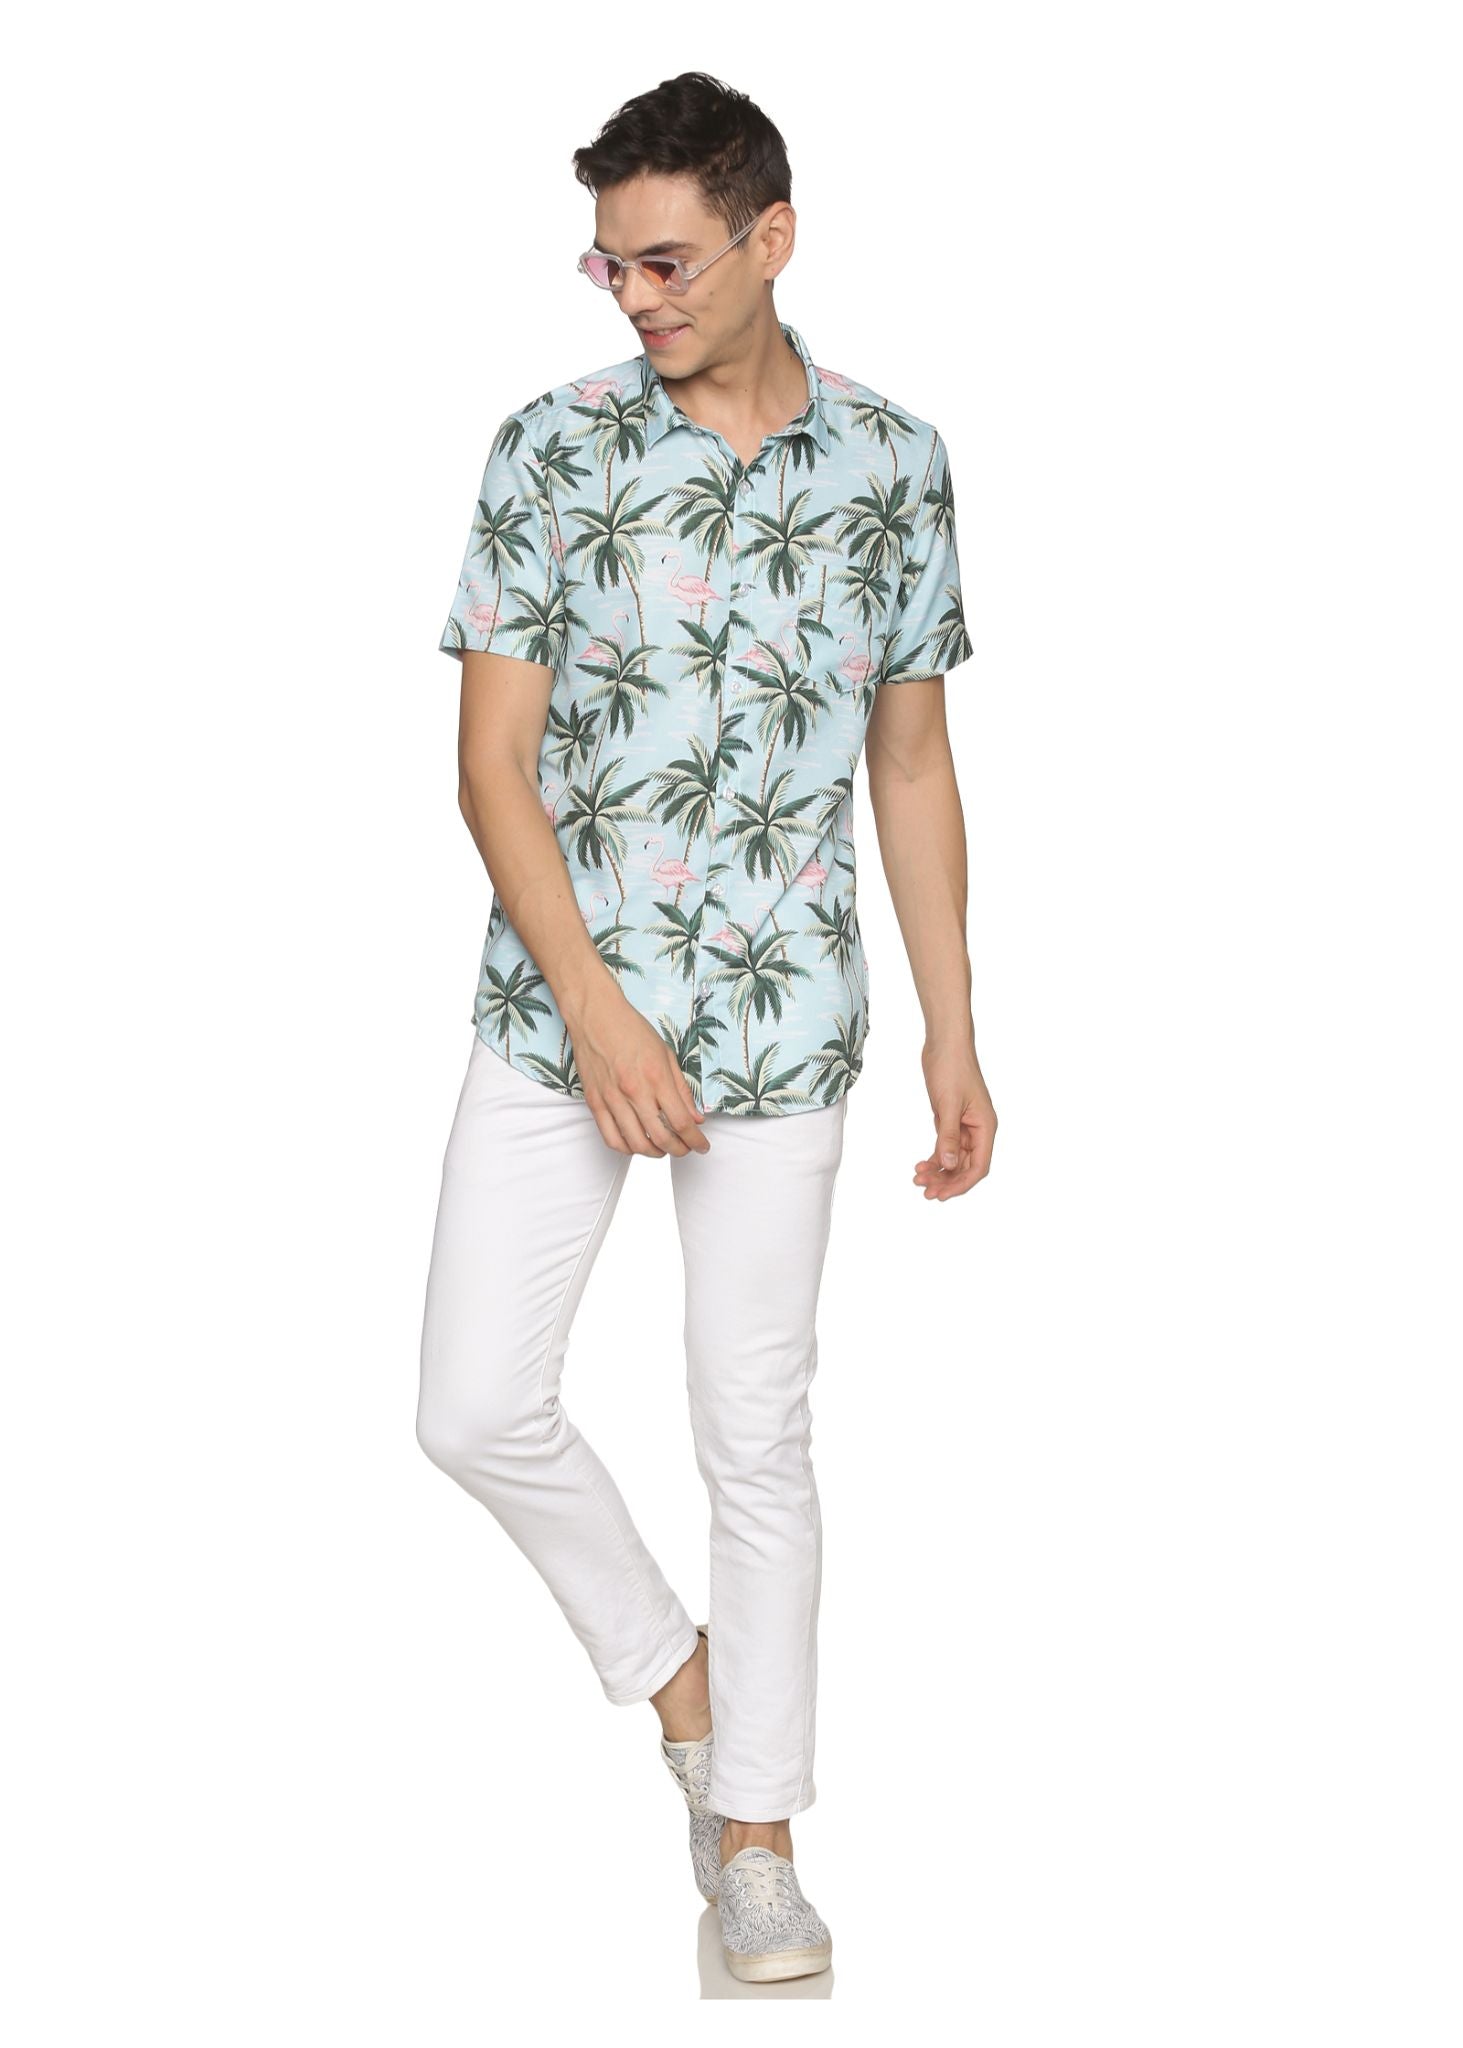 Bahamas/Jupiter Printed Shirt - Tusok